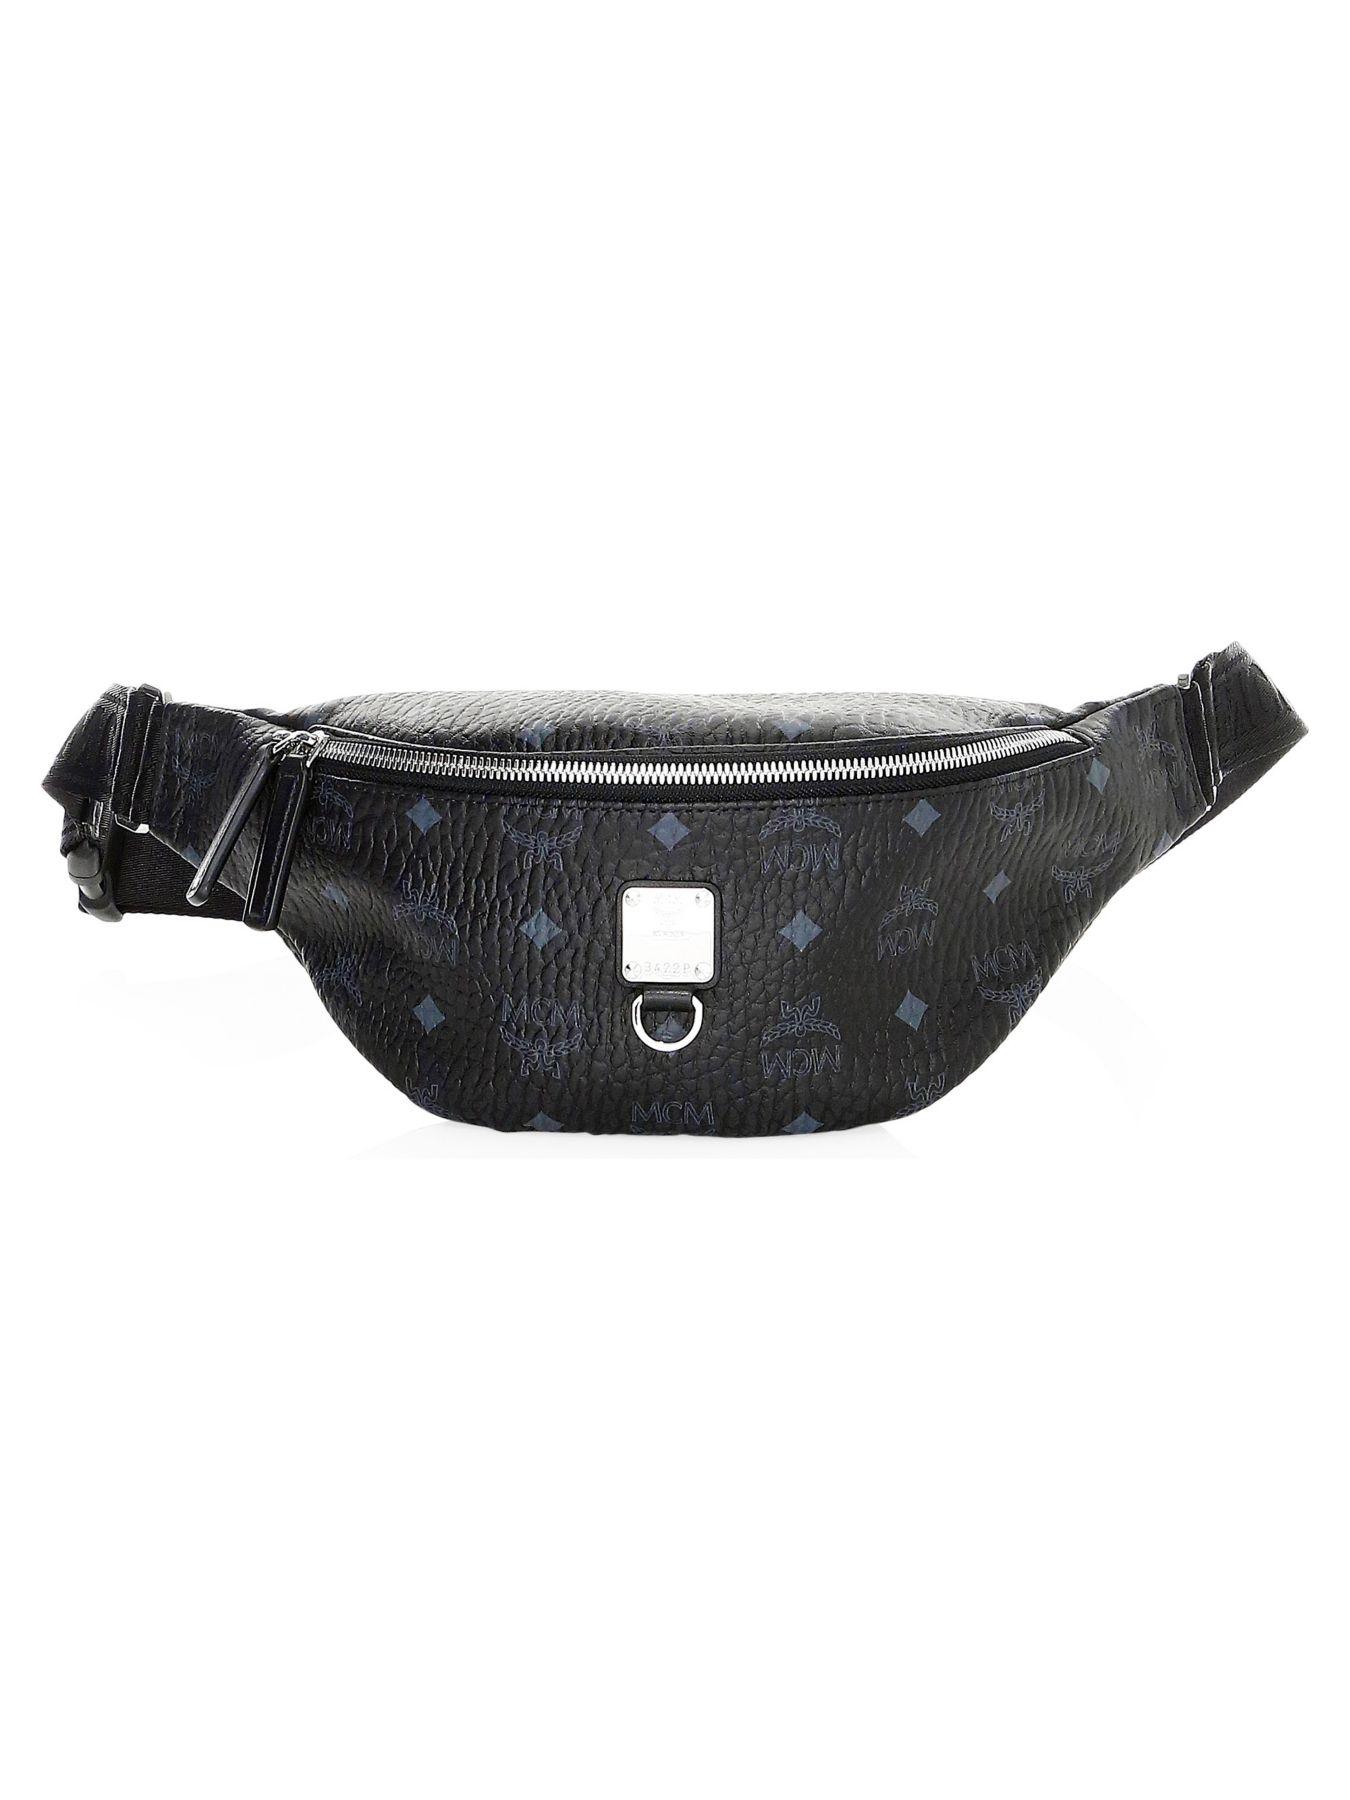 MCM Leather Fursten Visetos Small Belt Bag in Black - Lyst